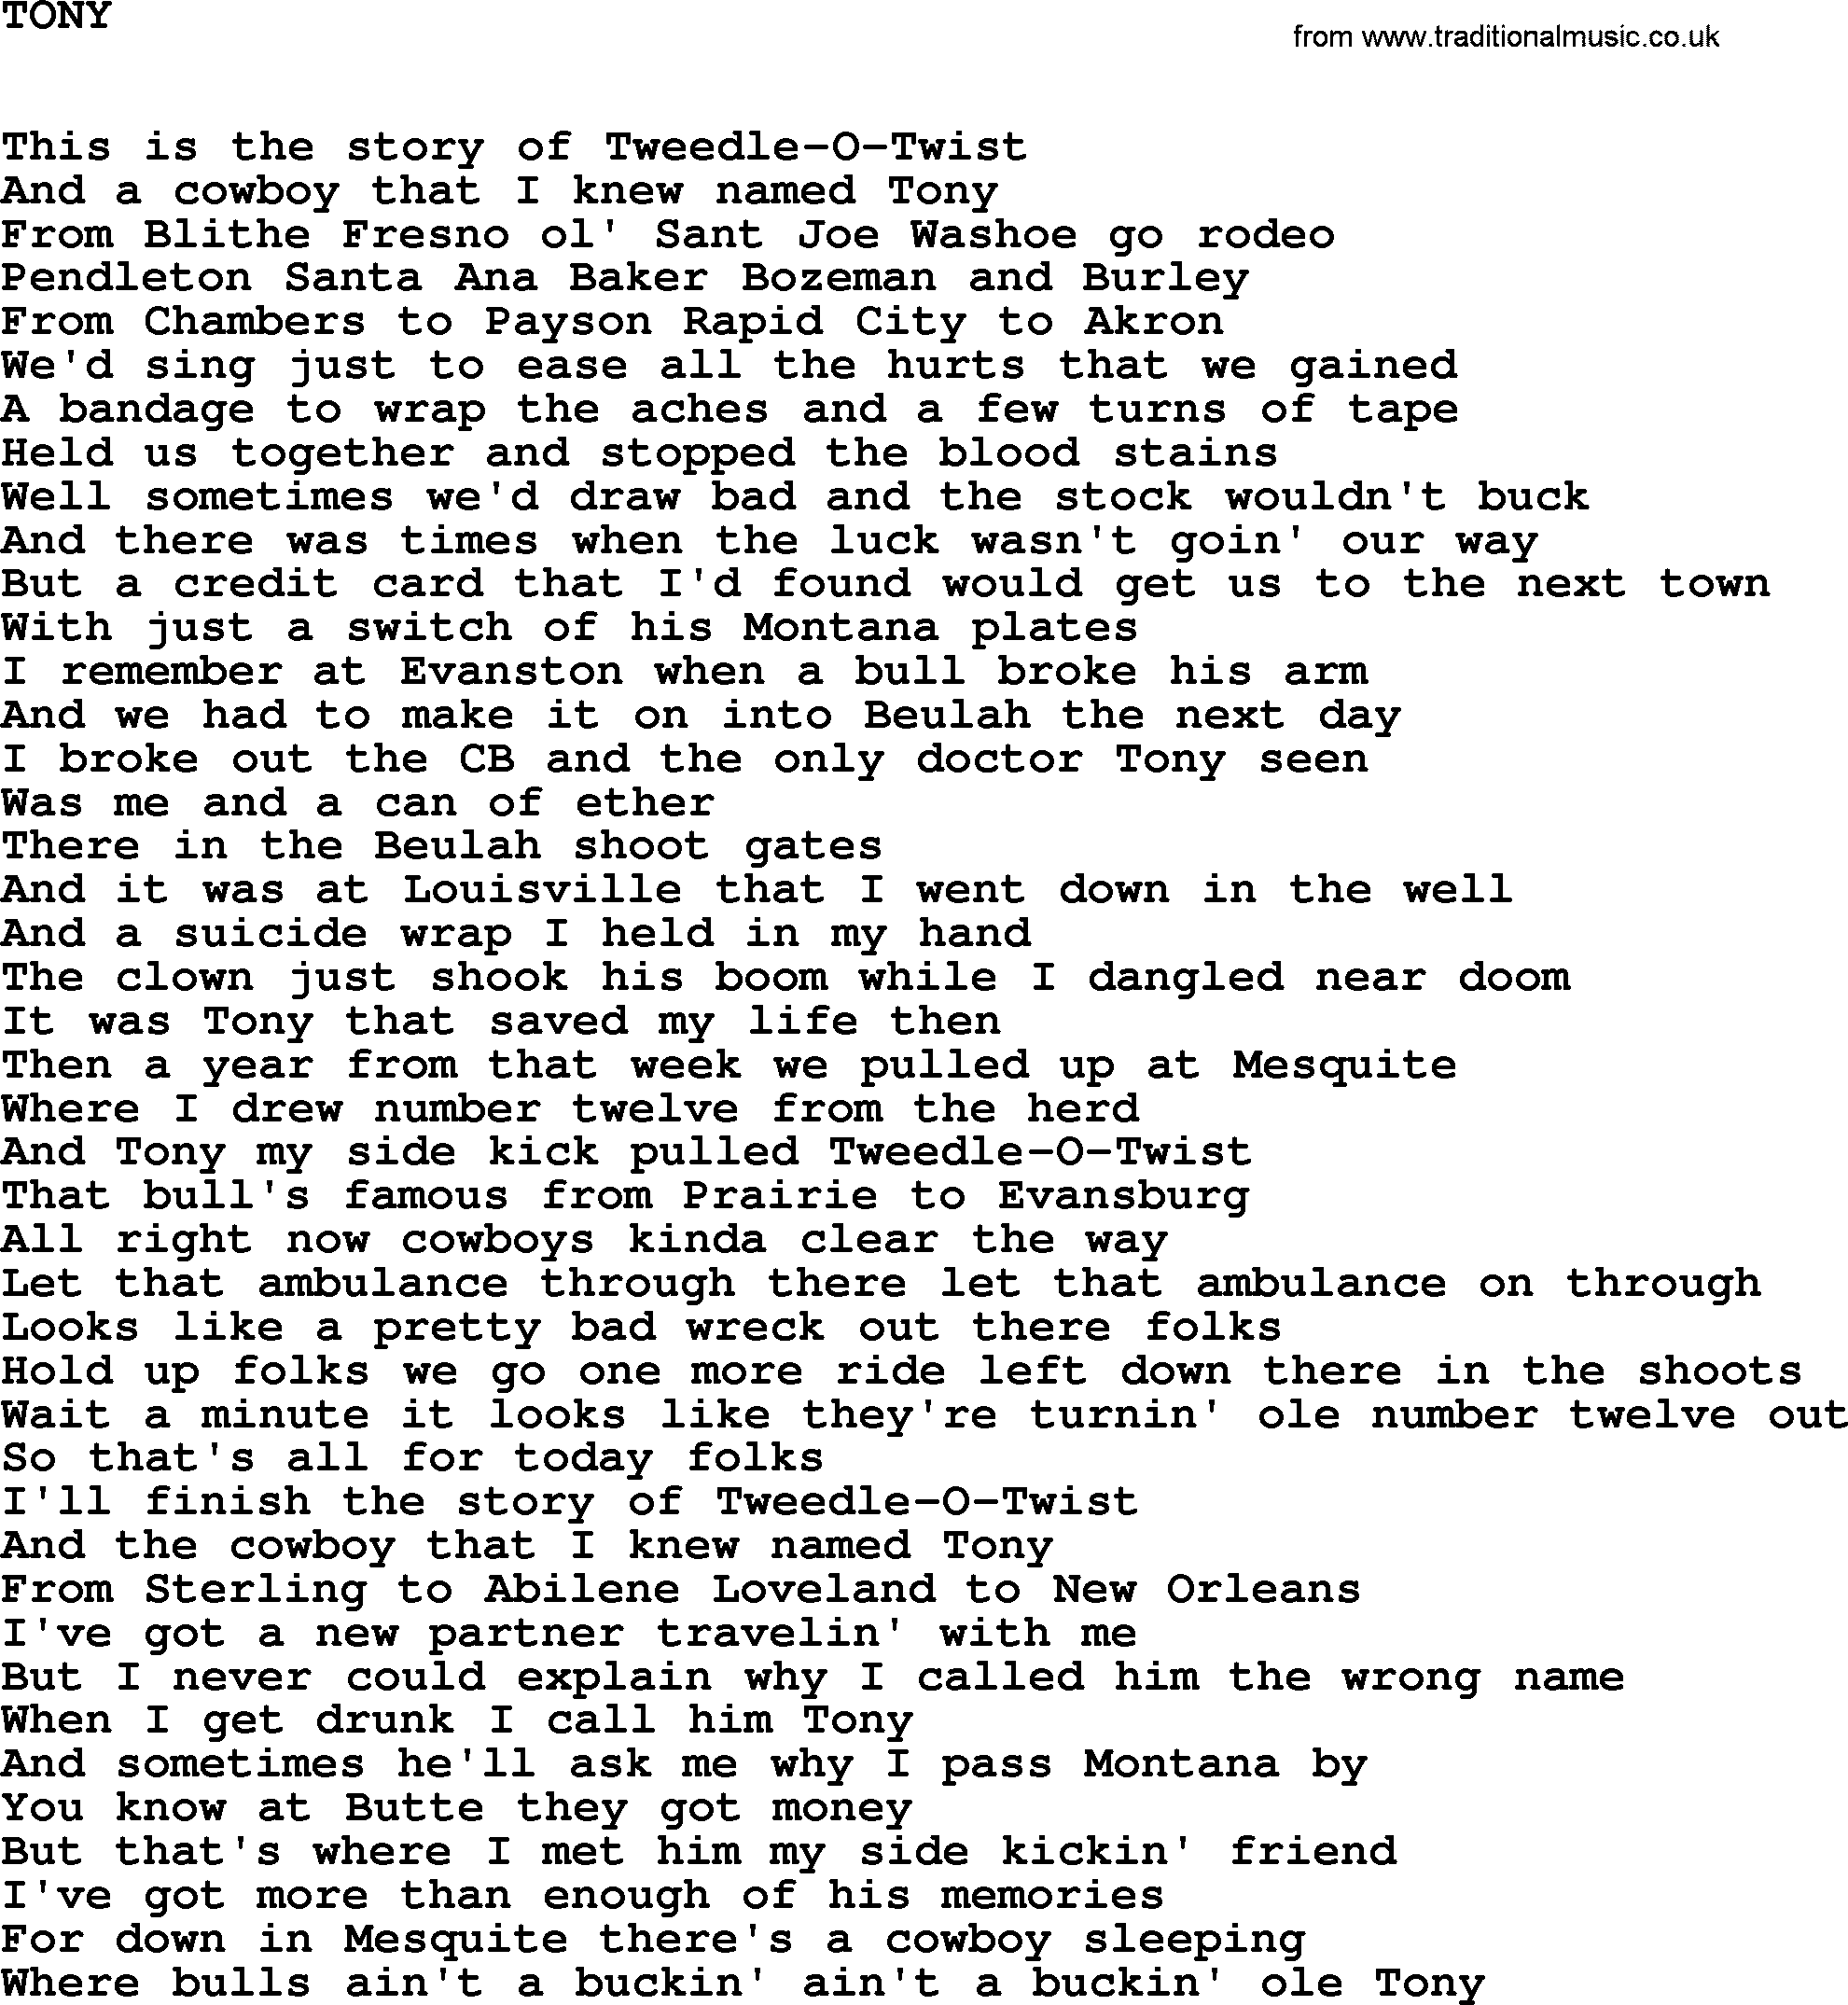 Johnny Cash song Tony.txt lyrics